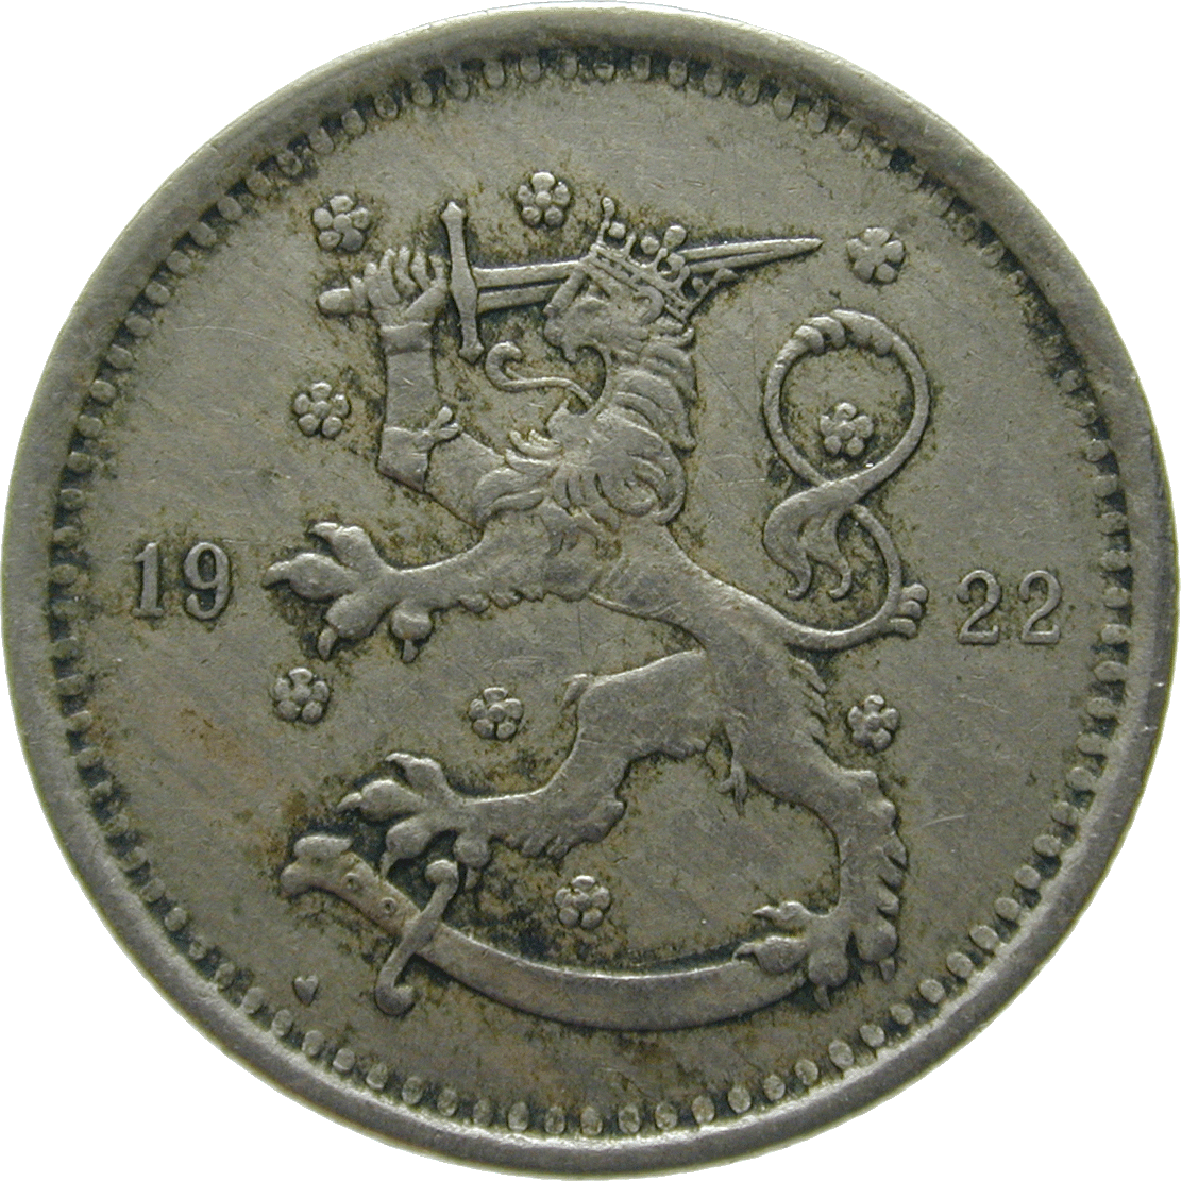 Republik Finnland, 1 Markka 1922 (obverse)